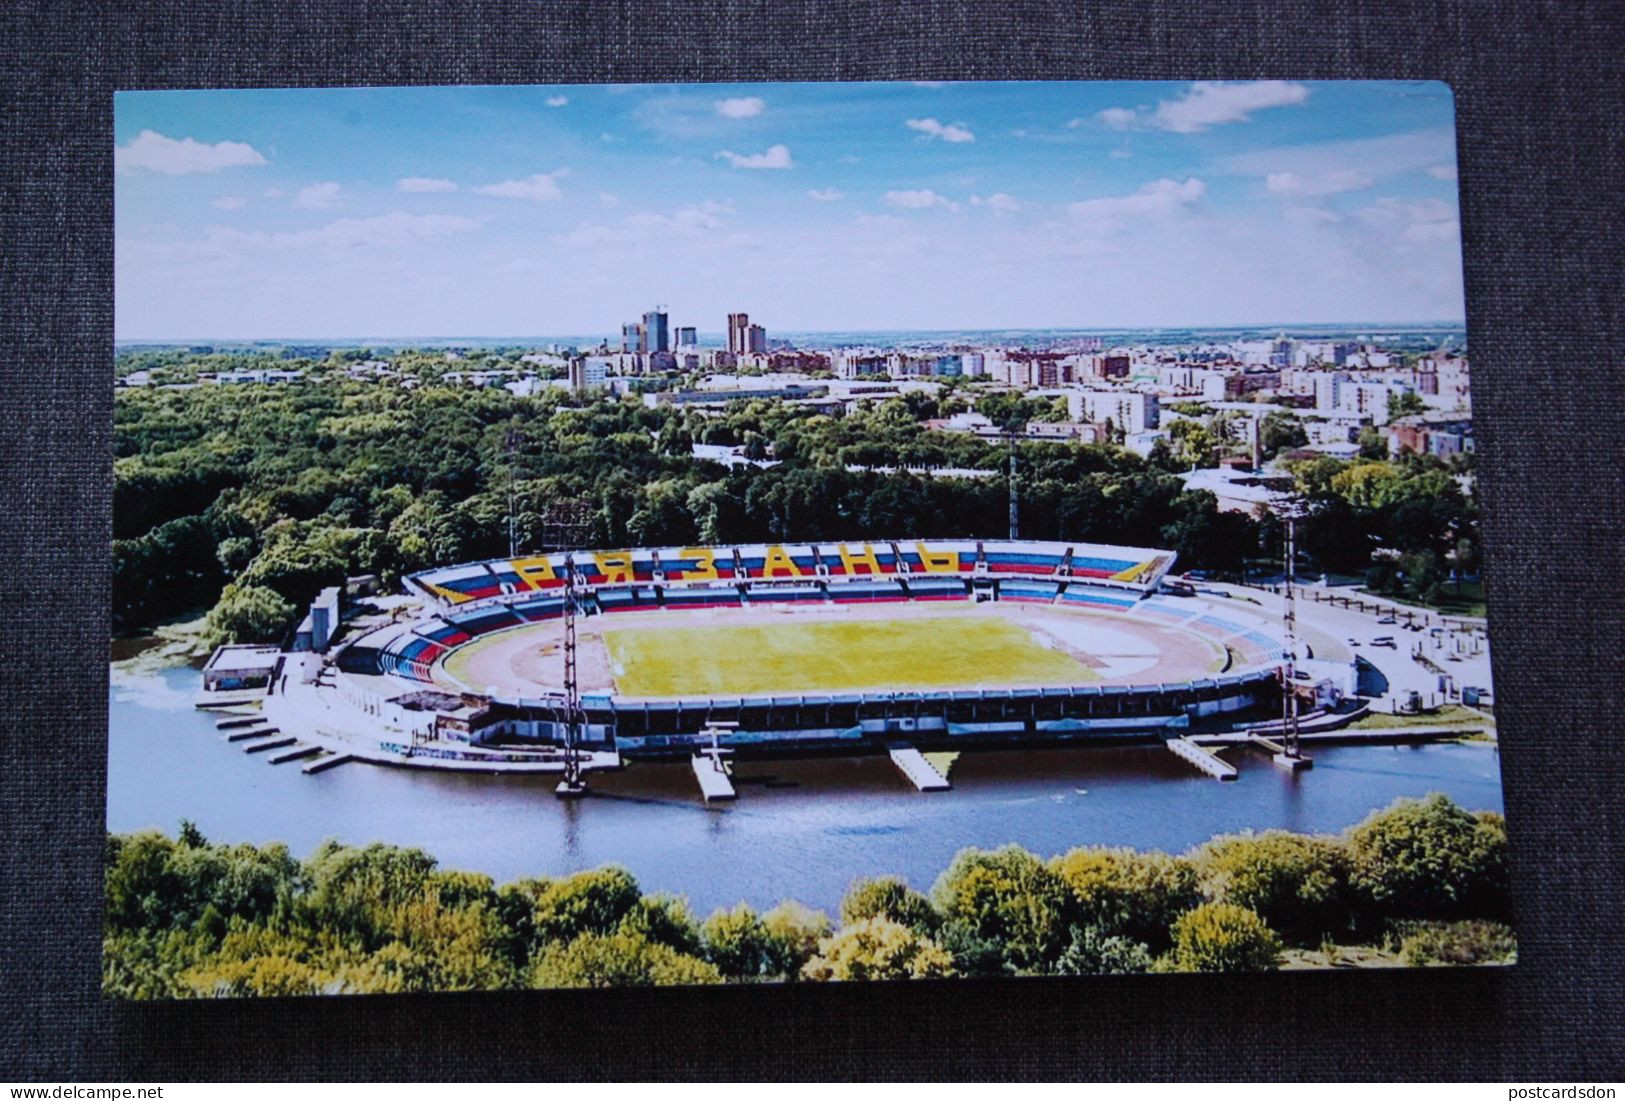 RUSSIA Ryazan "Central "Stadium / Stade - Modern Postcard - Stadiums